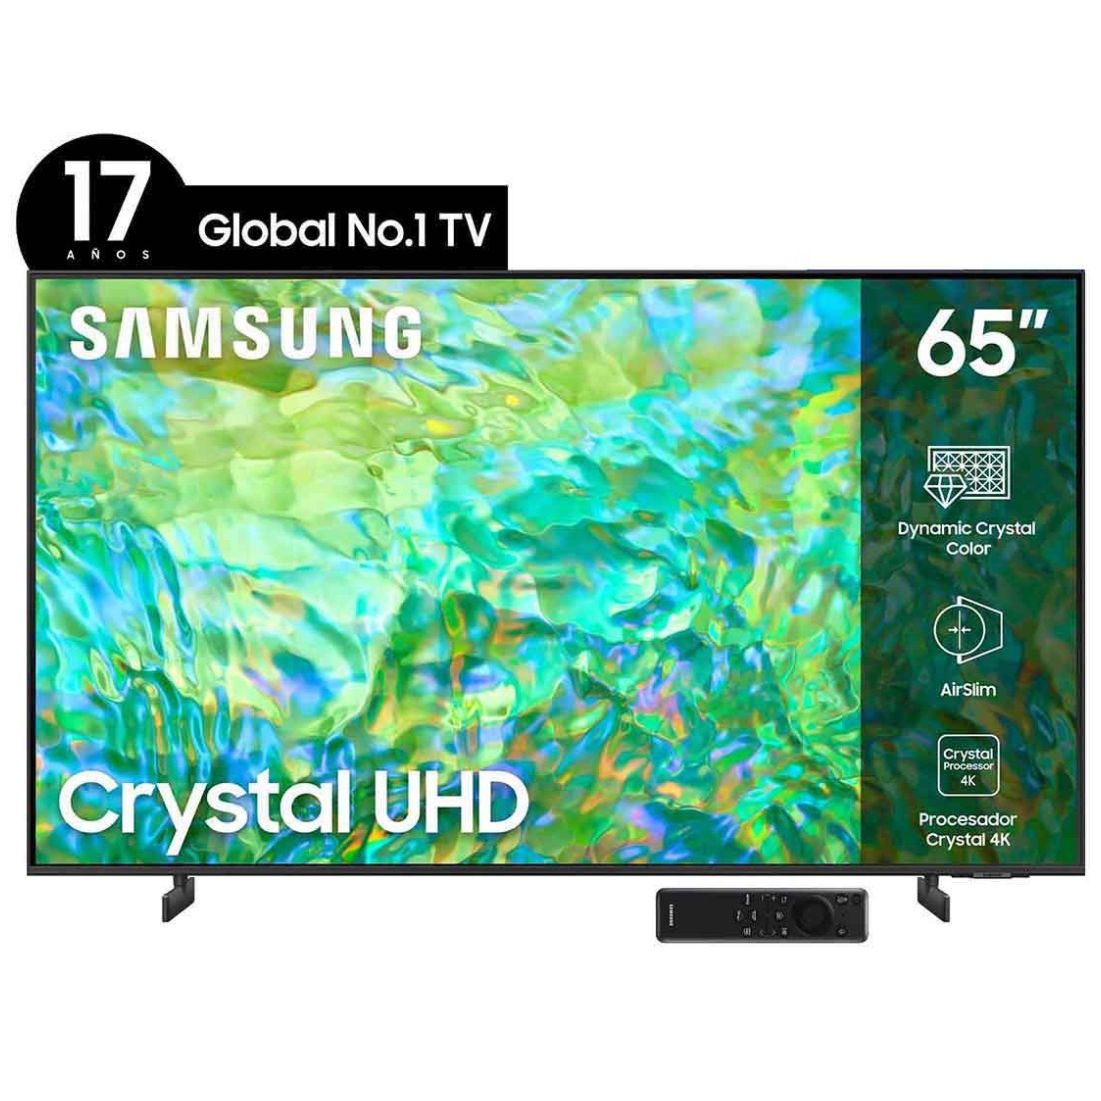 Pantalla Samsung 65 Pulgadas LED 4K Smart TV a precio de socio